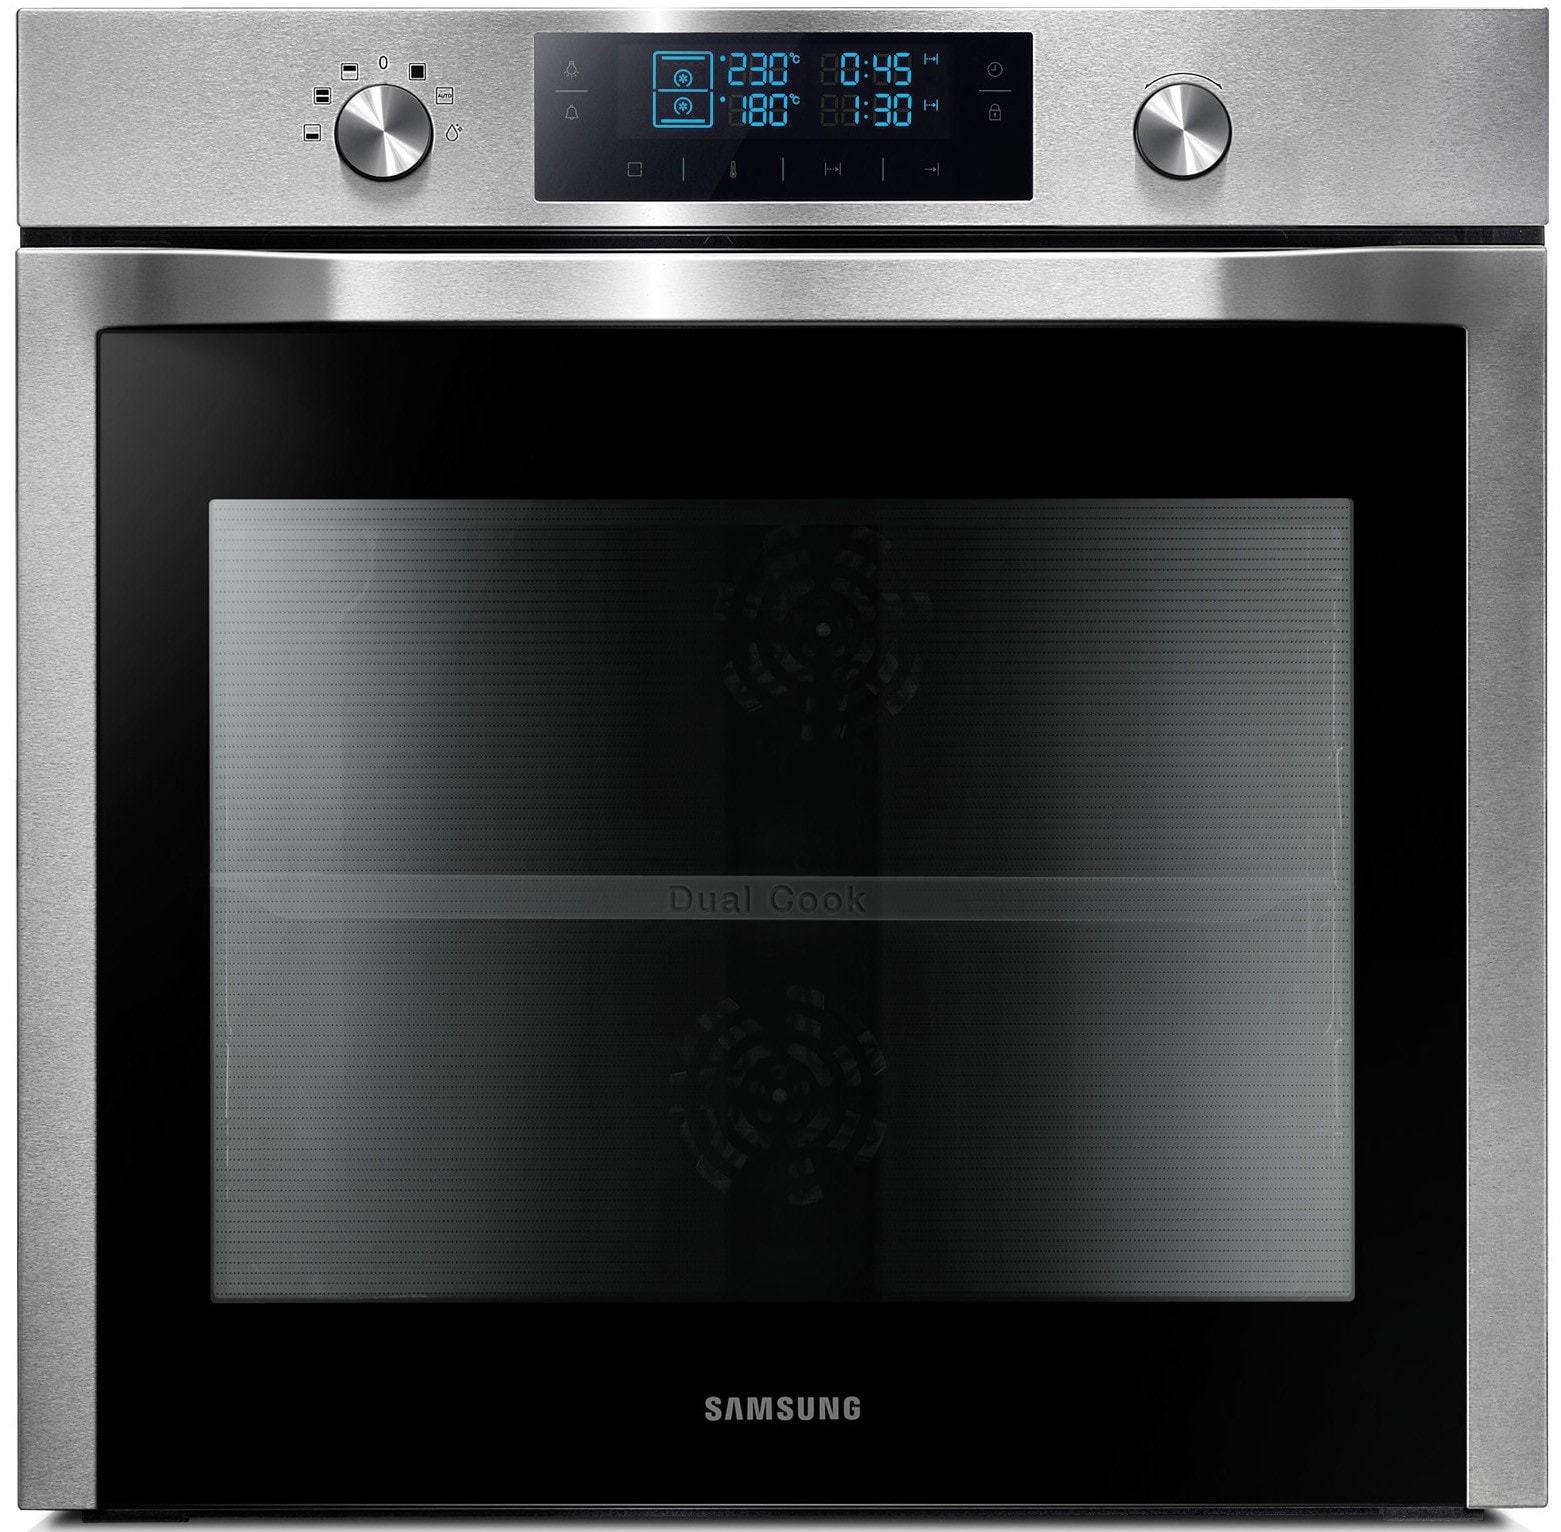 Samsung dual cook stekeovn nv70h7786es